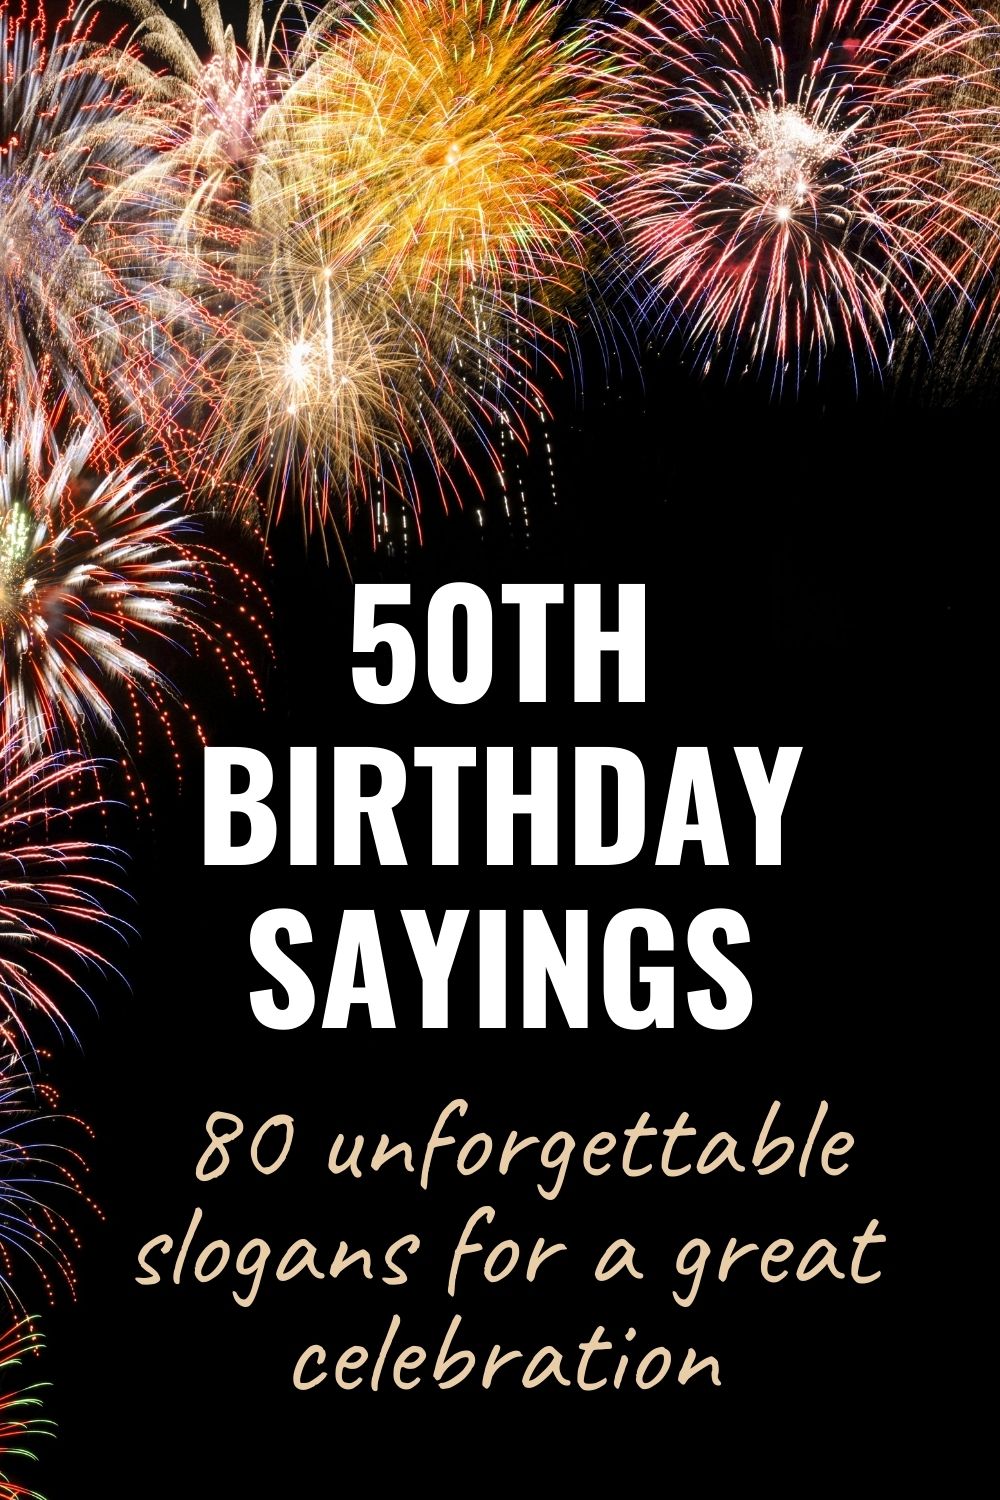 50th birthday sayings